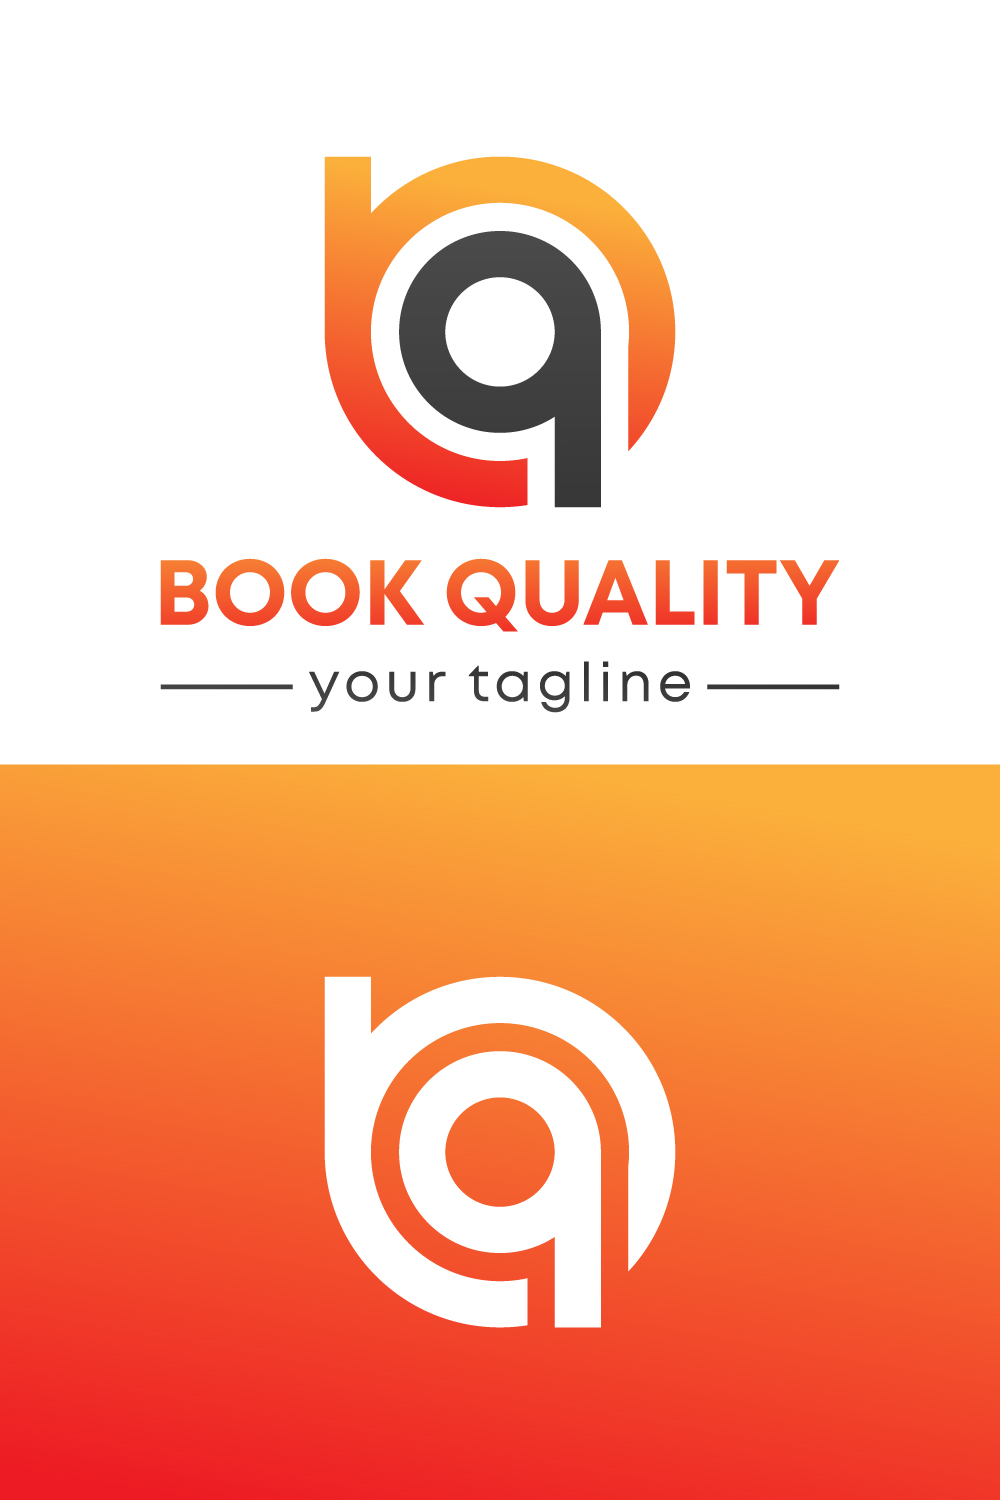 BQ logo design pinterest preview image.